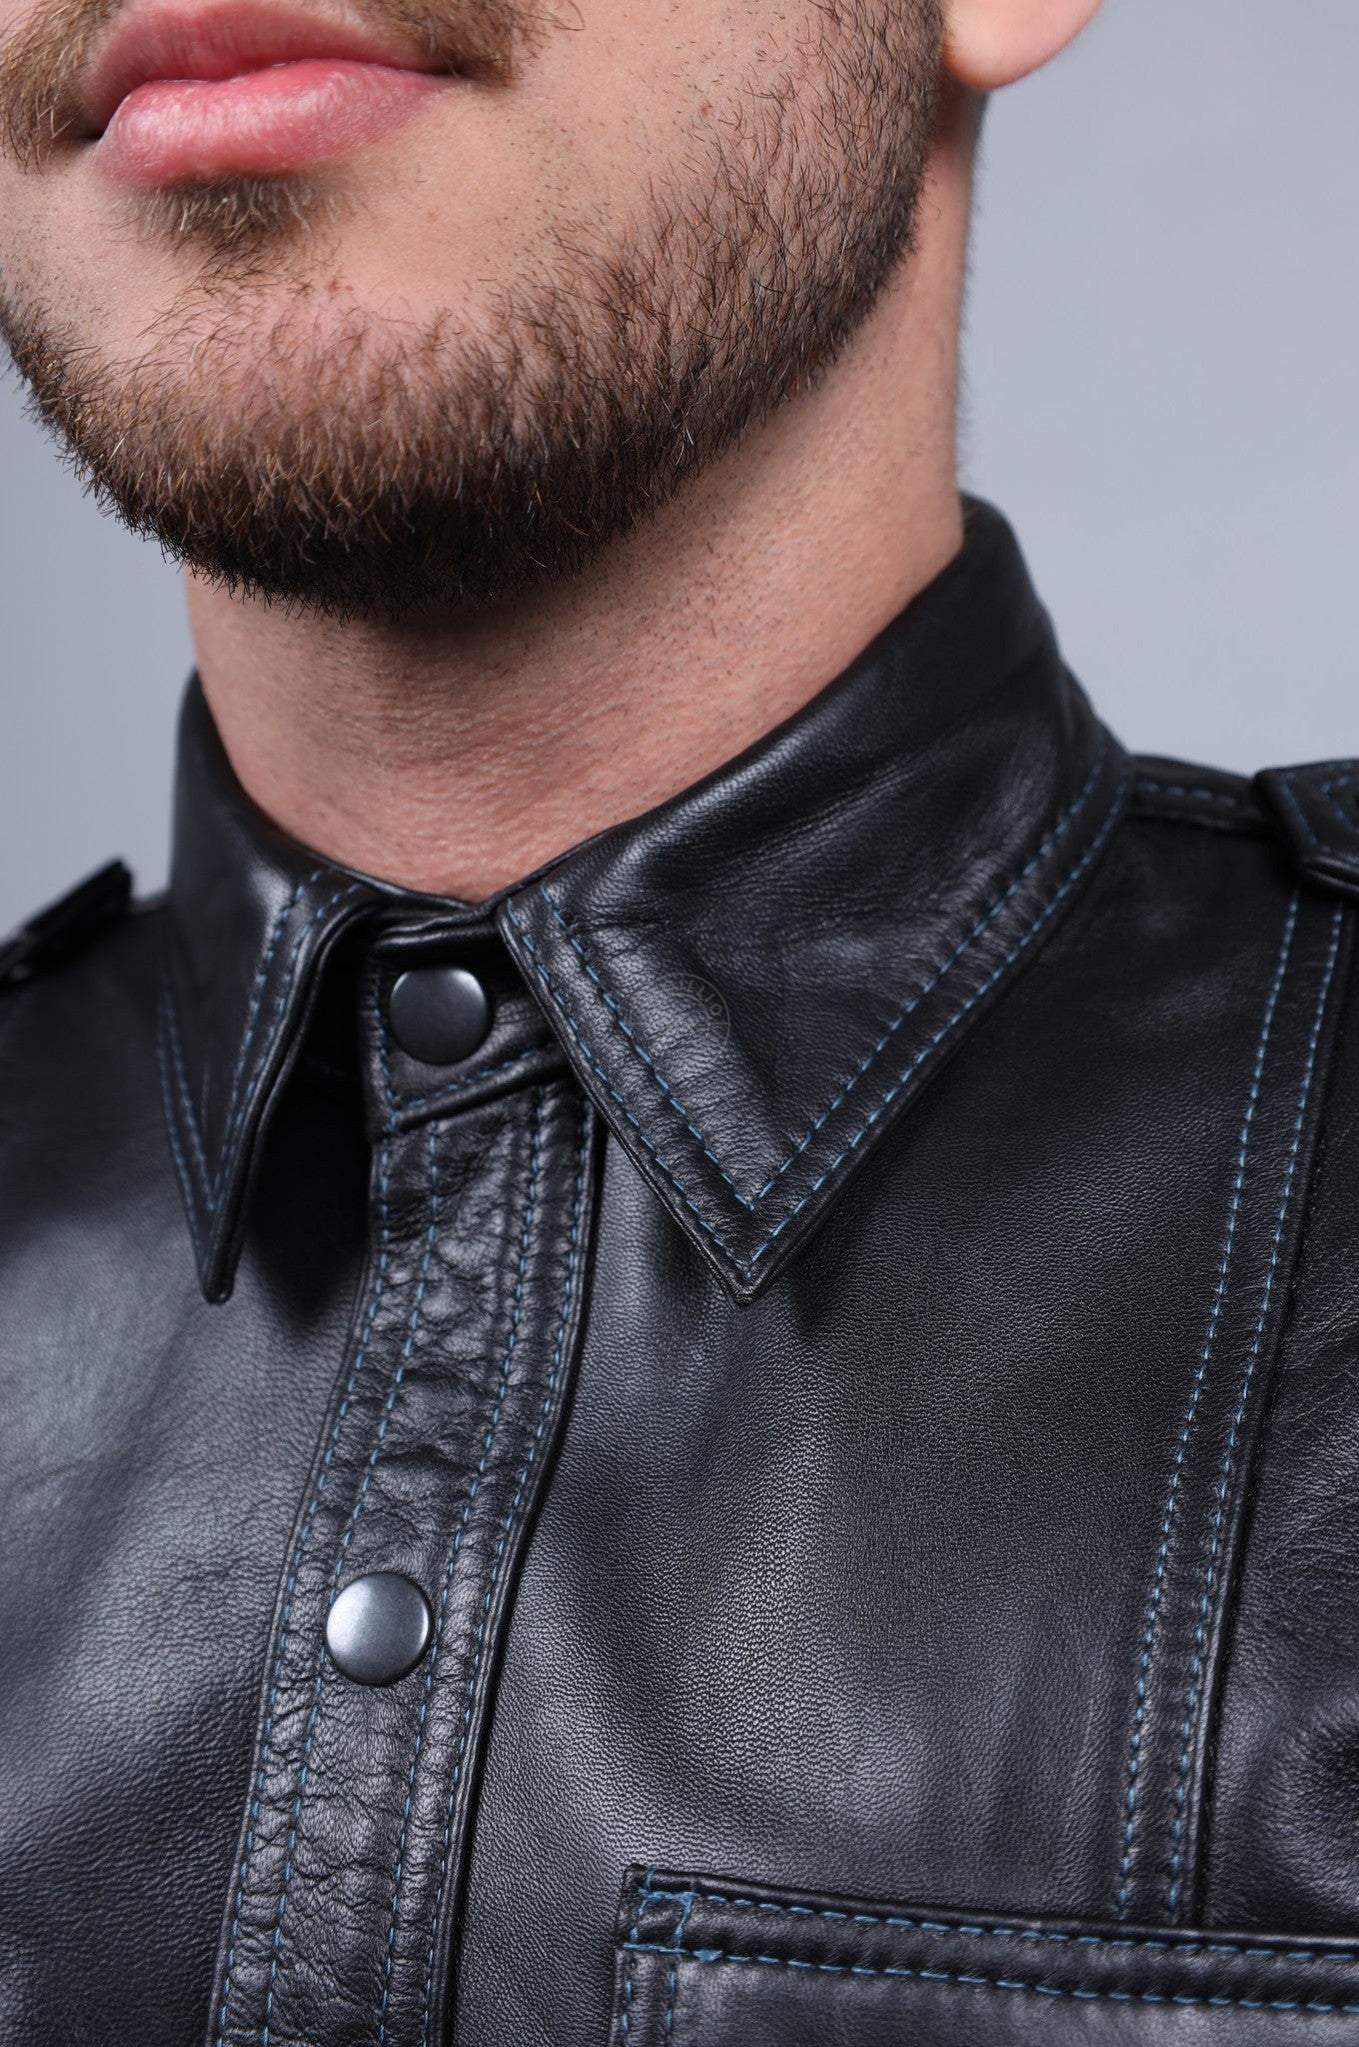 Black Leather Shirt - Jeans Blue Stitching at MR. Riegillio